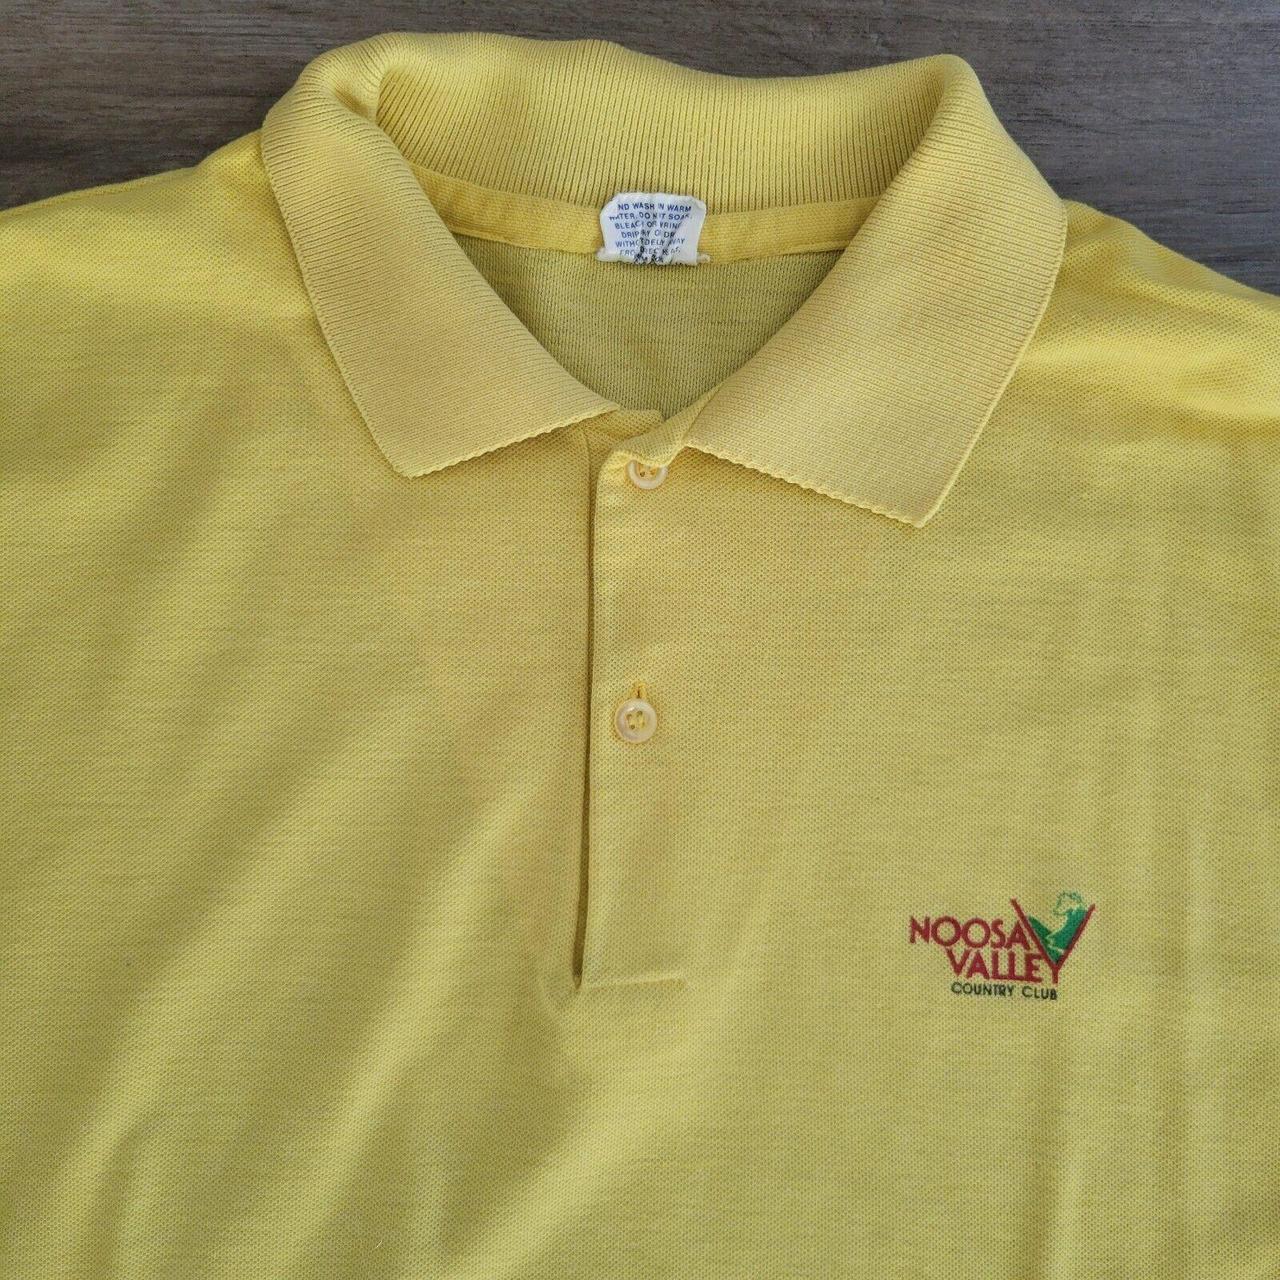 JD Williams Men's Yellow Polo-shirts (2)